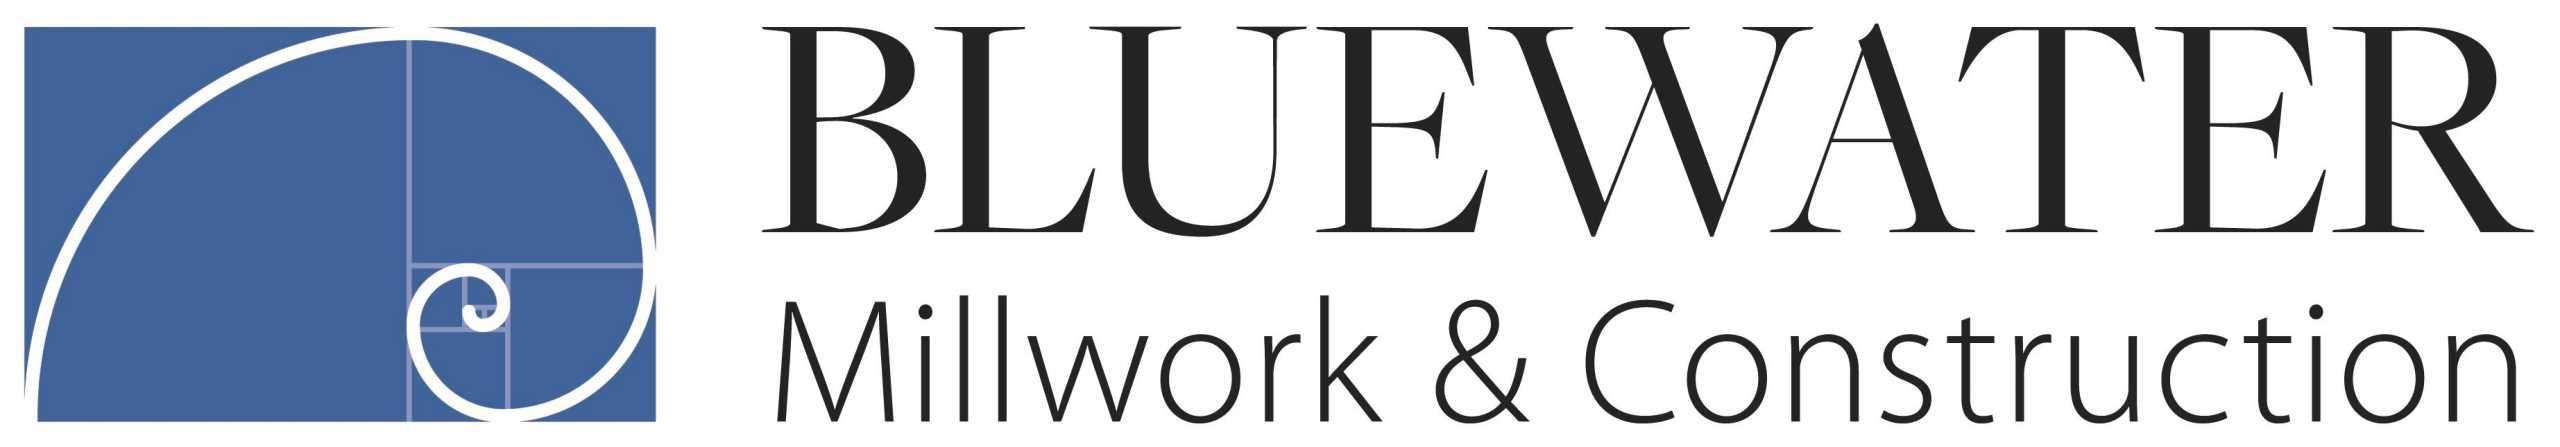 Bluewater Millwork & Construction, Inc. Logo